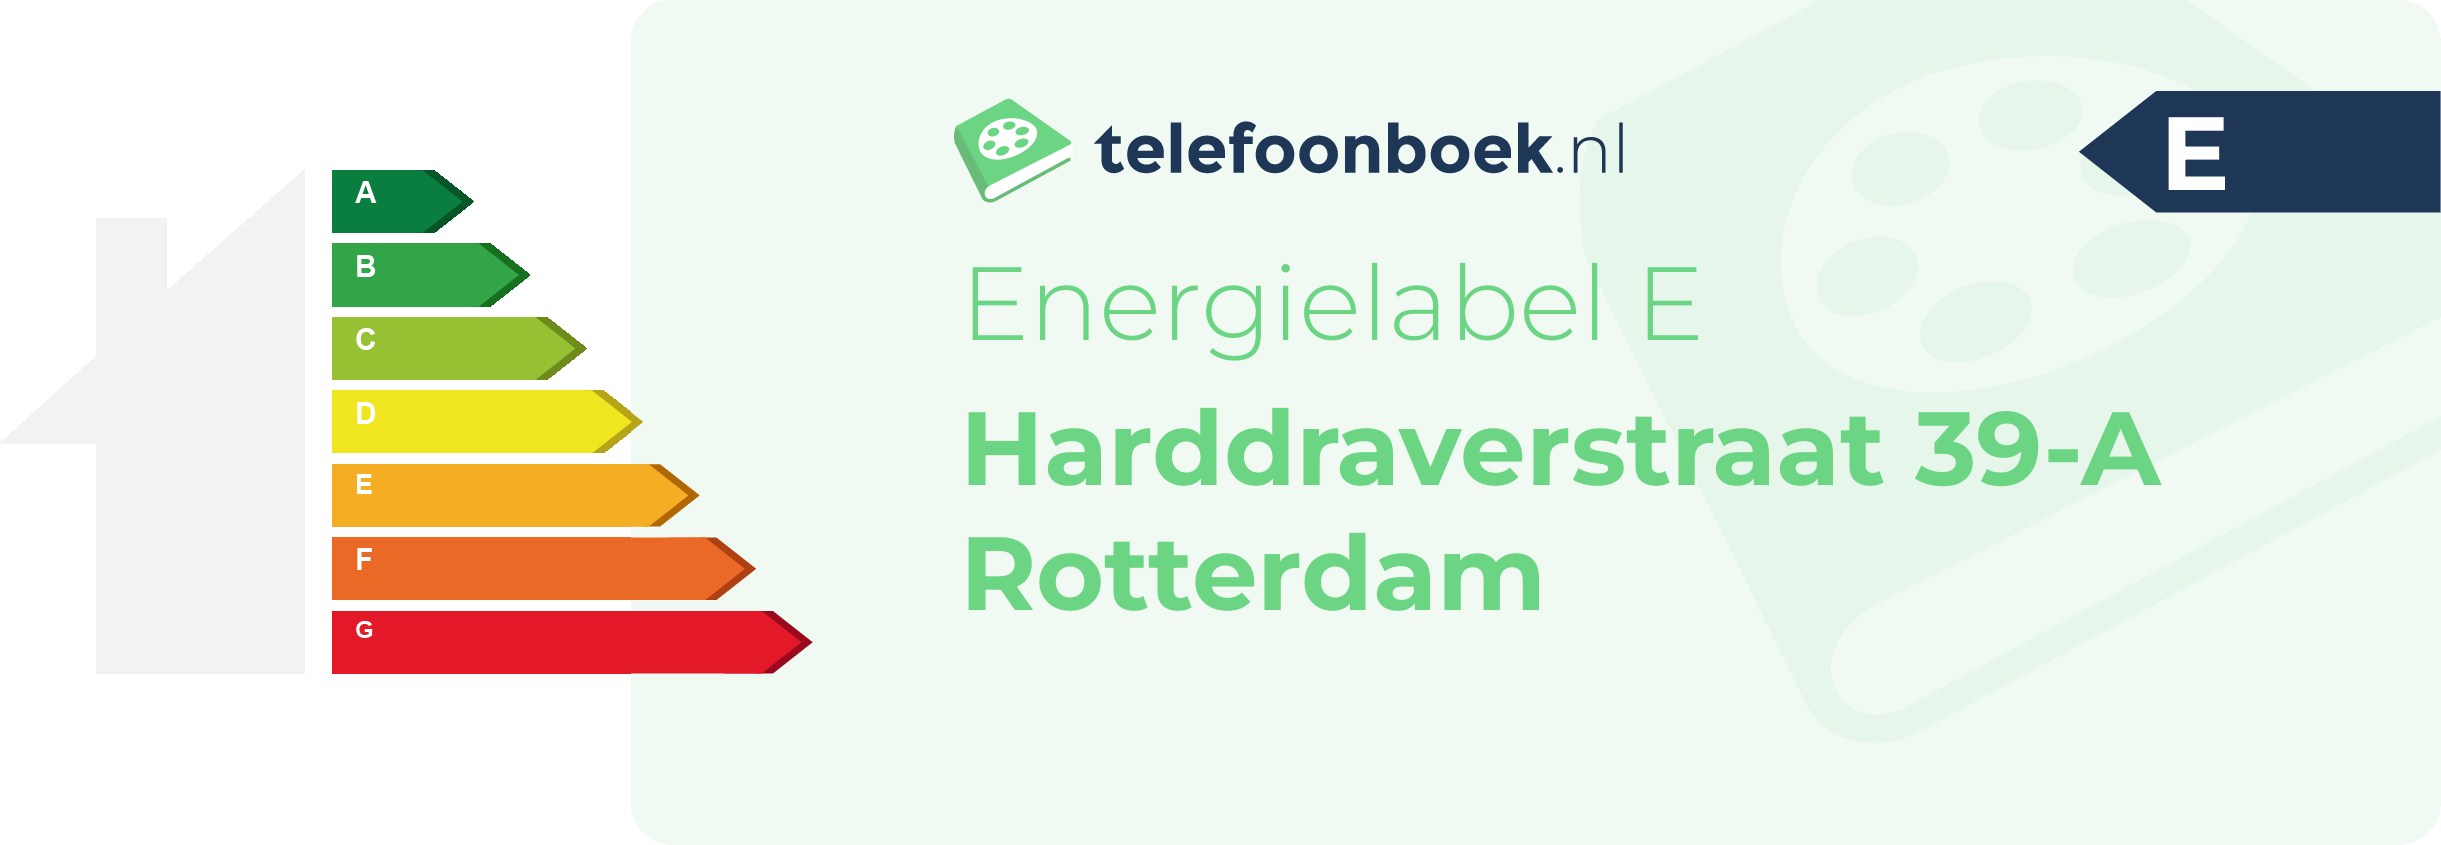 Energielabel Harddraverstraat 39-A Rotterdam